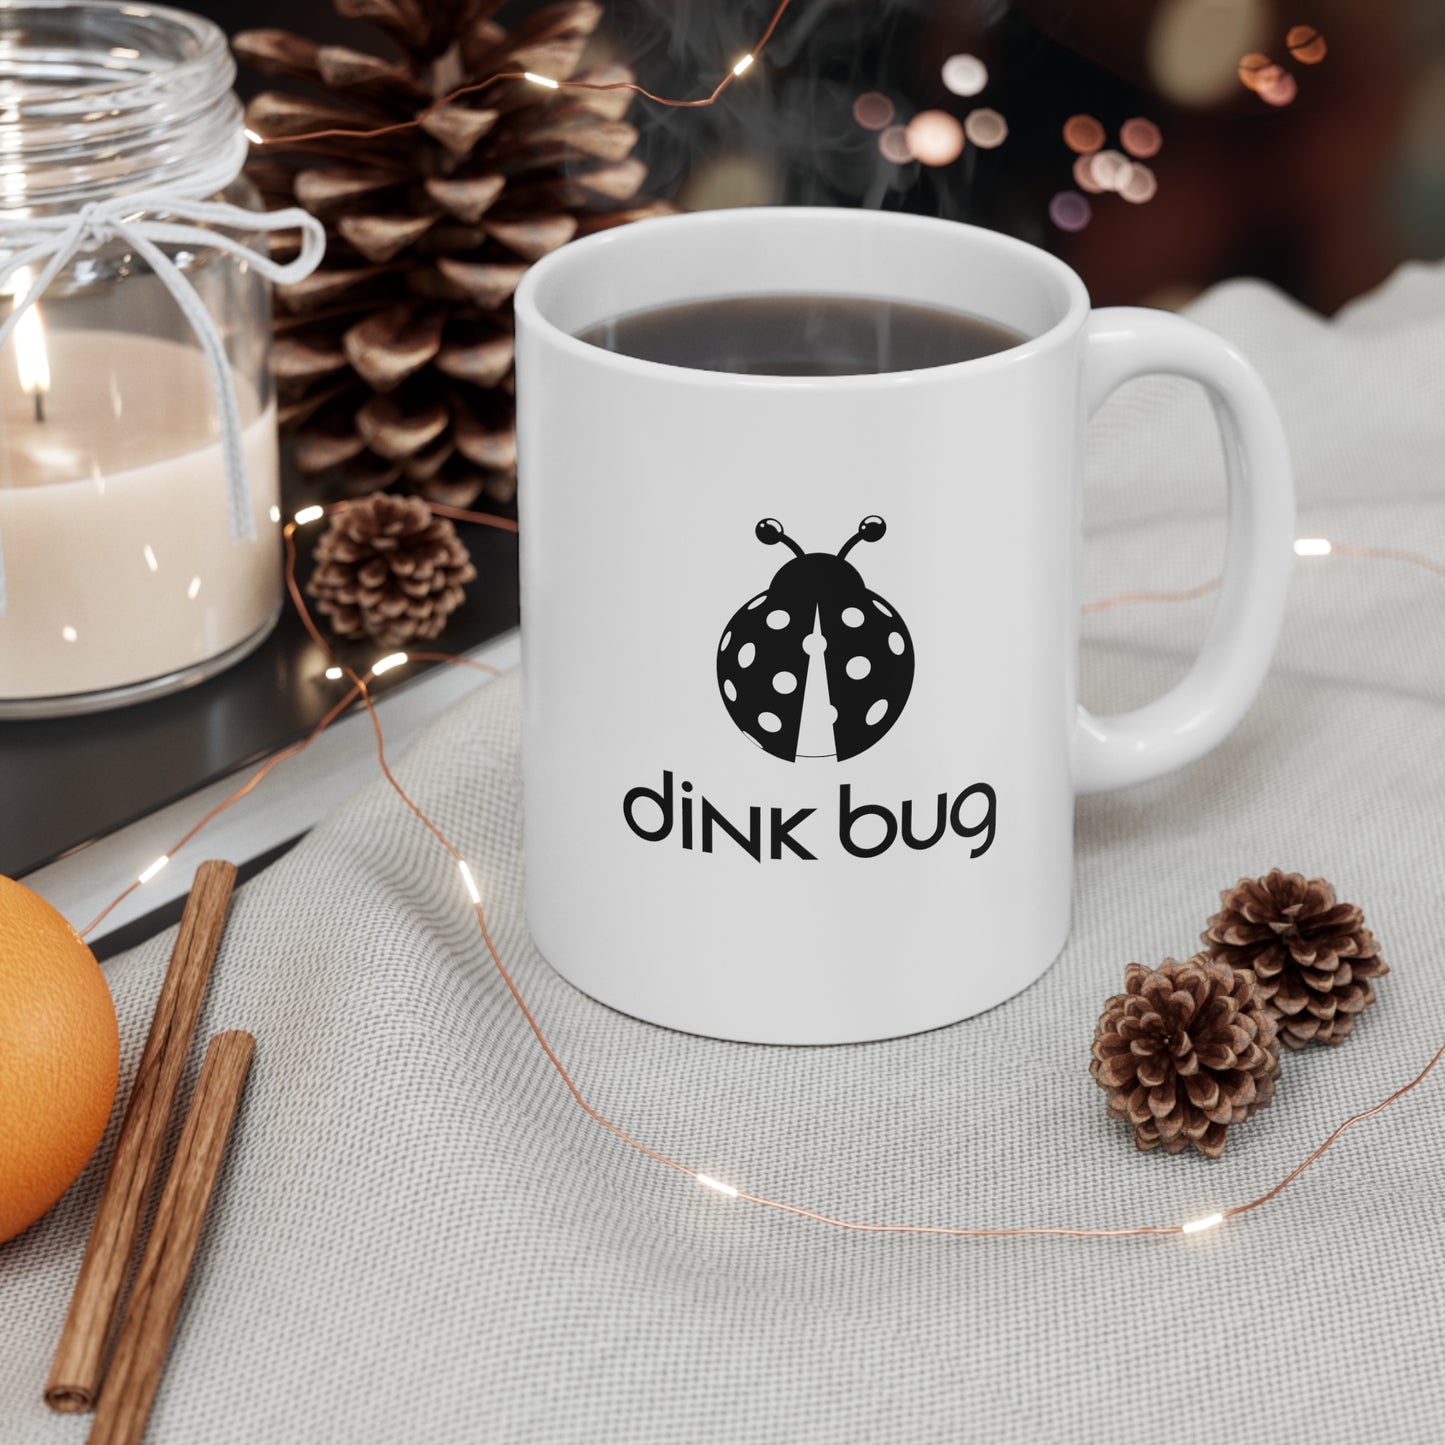 dink bug 11 Oz White Coffee Mug